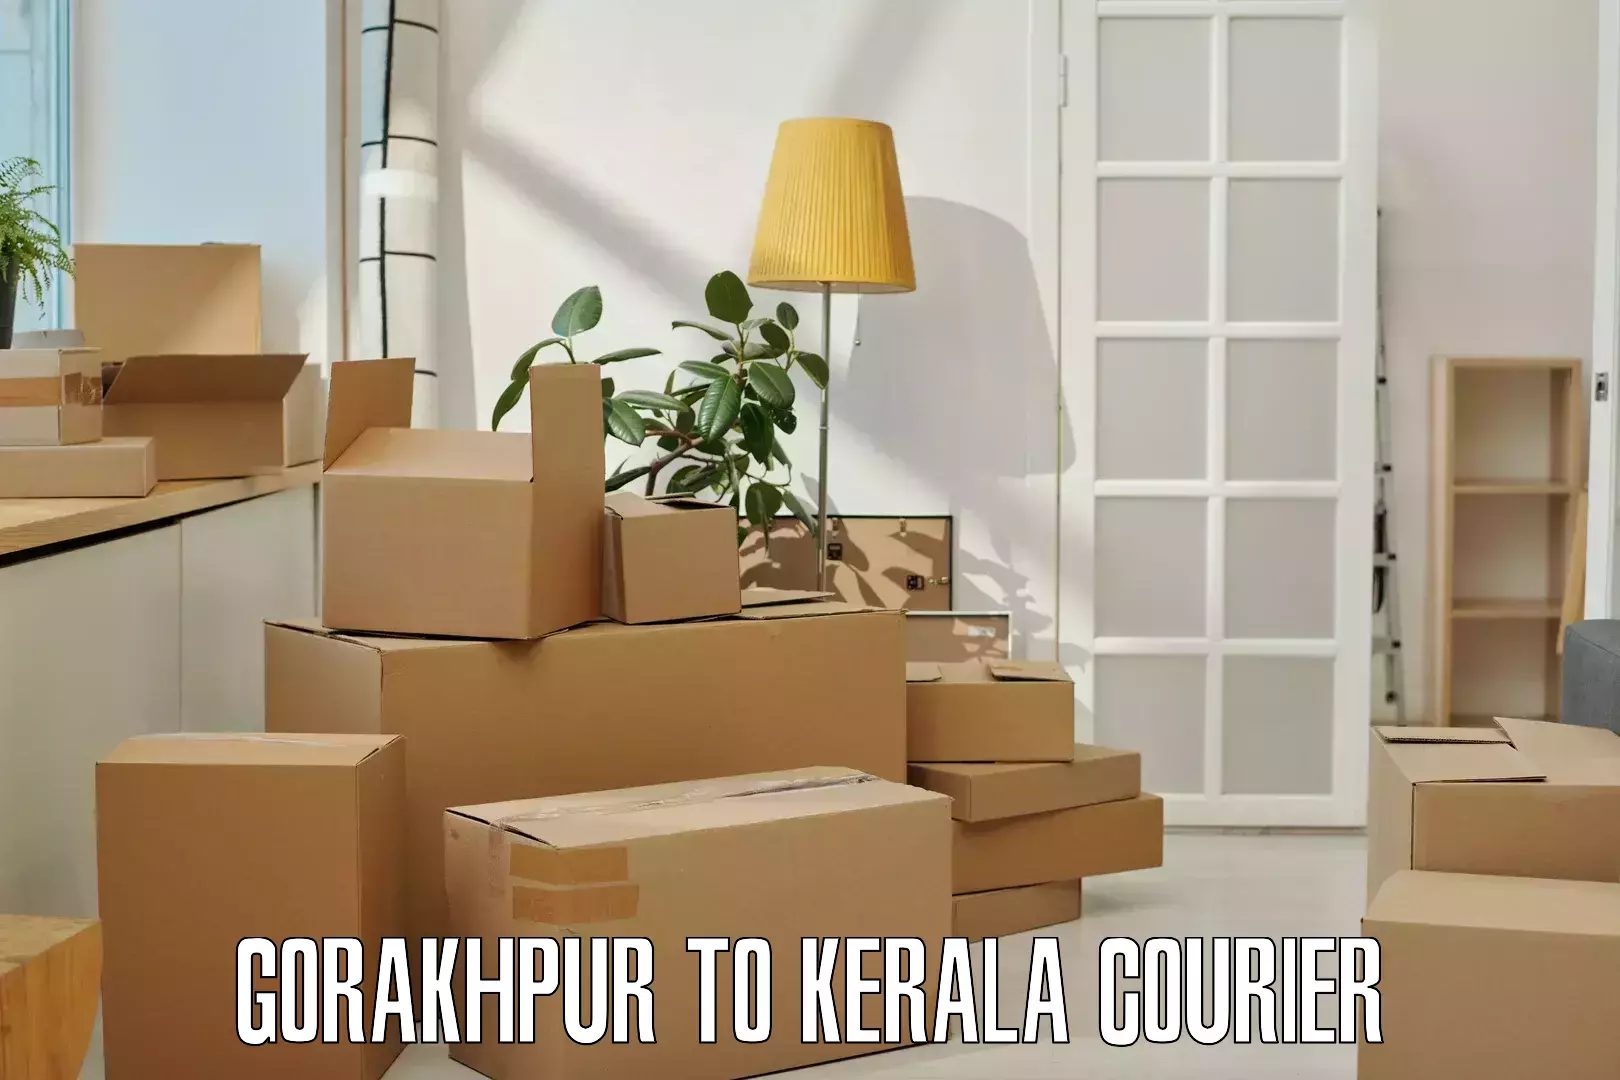 Delivery service partnership Gorakhpur to Kerala